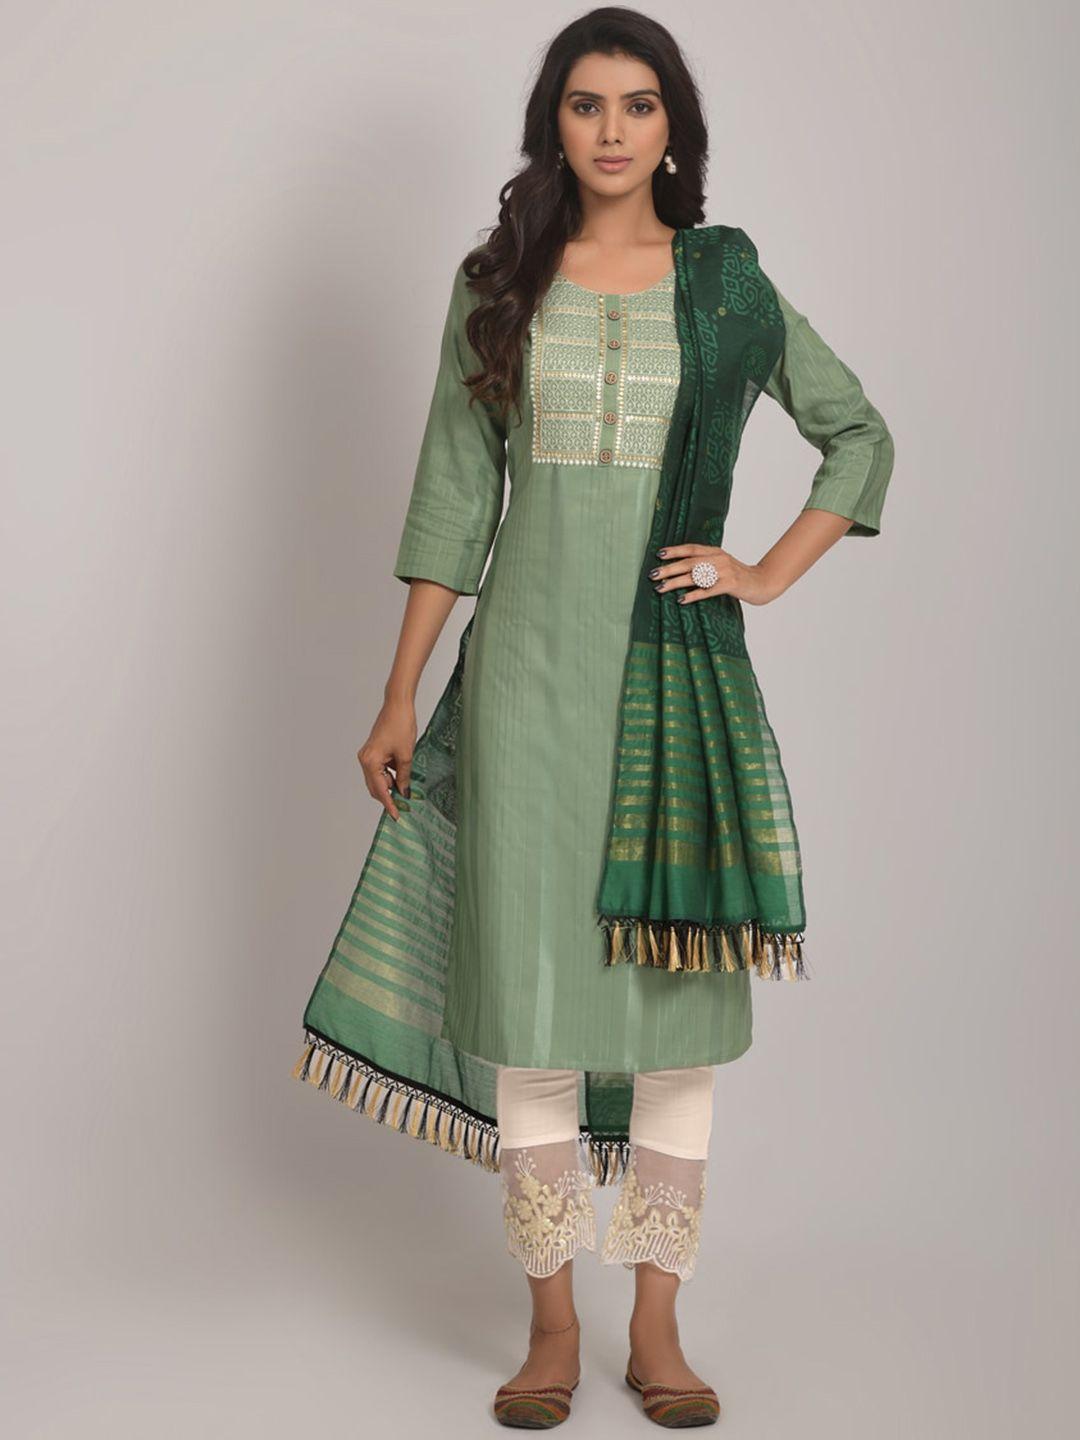 jinax women lime green floral embroidered regular kurti with pyjamas & with dupatta